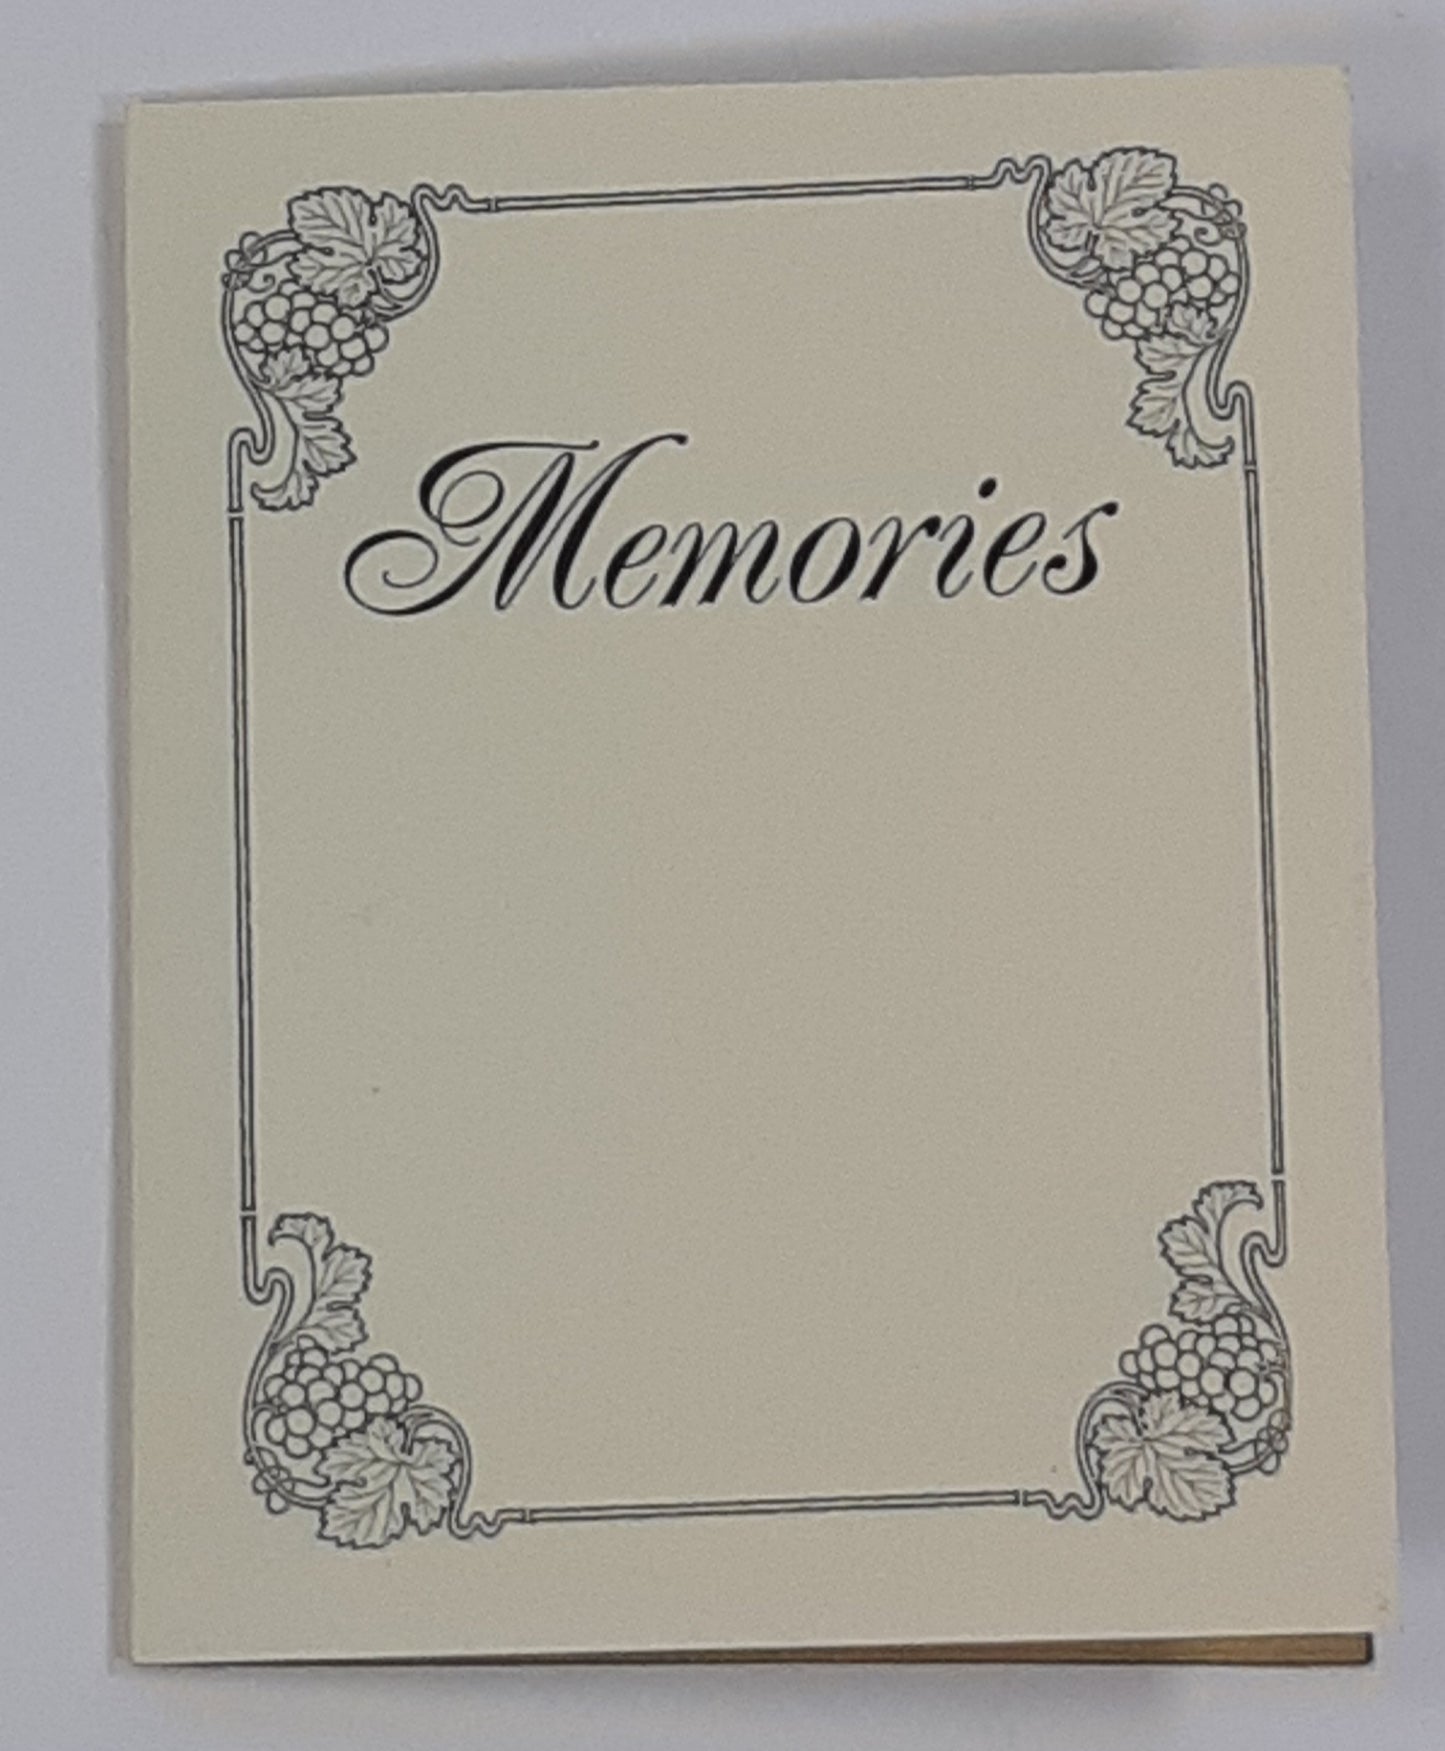 Boardwalk Empire: Richard Harrow 'Memories' Card Episode 307